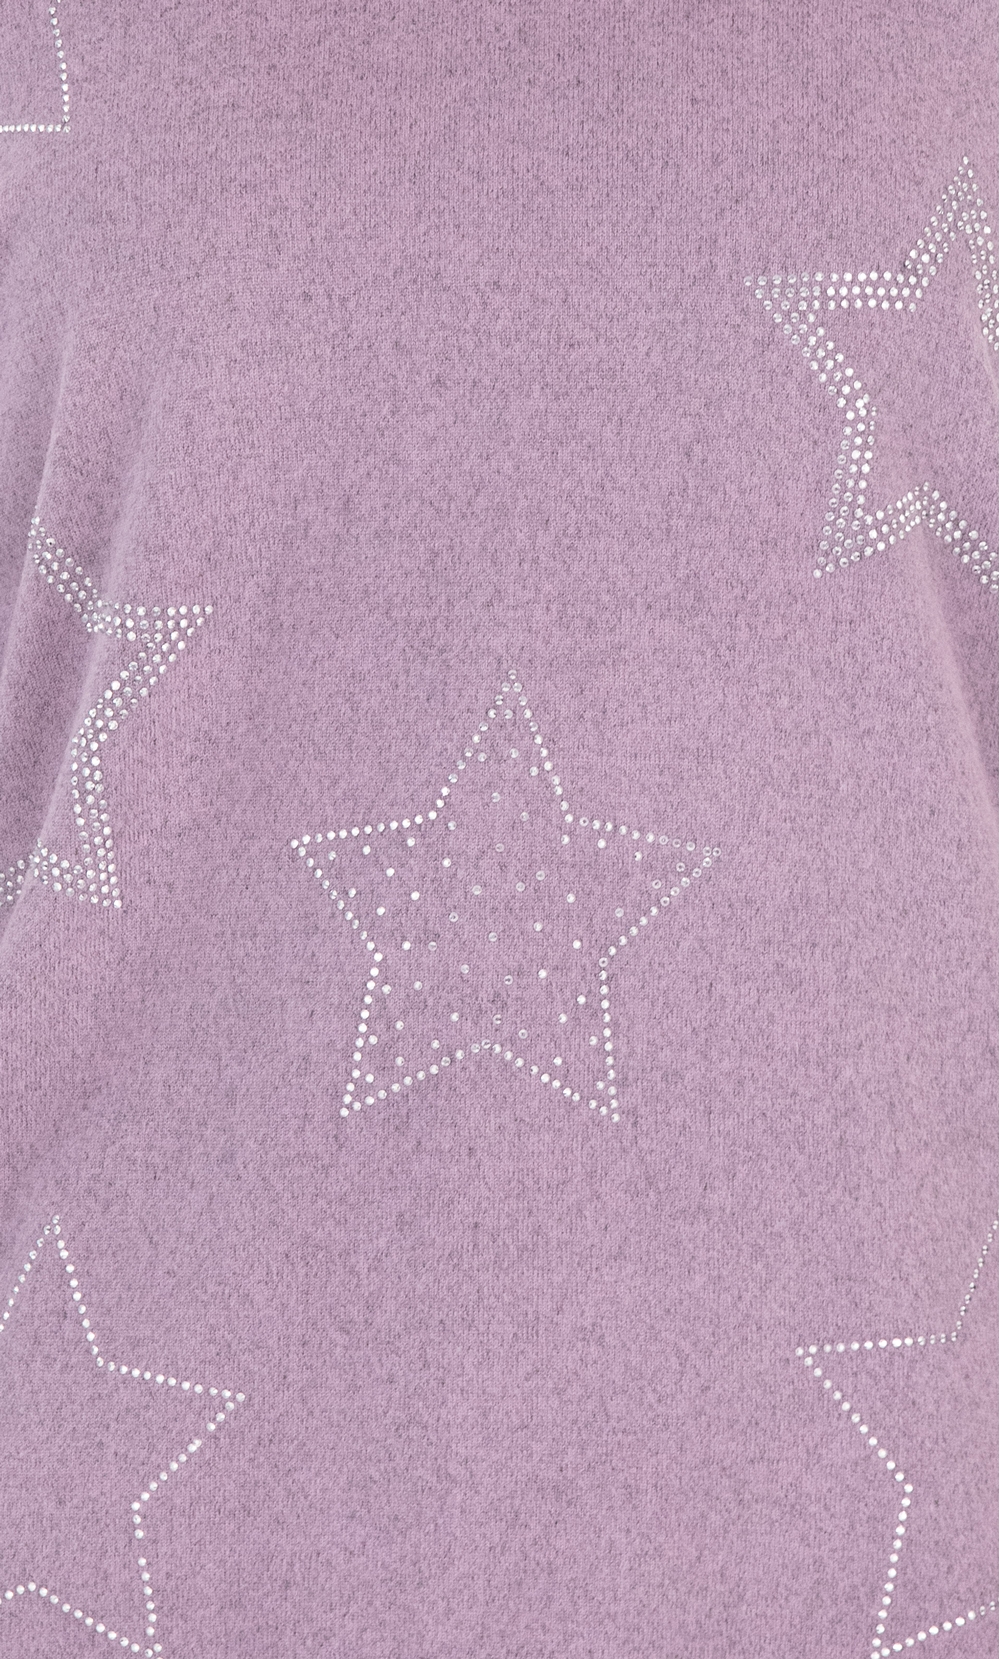 Supersoft Brushed Knit Embellished Star Loungewear Top